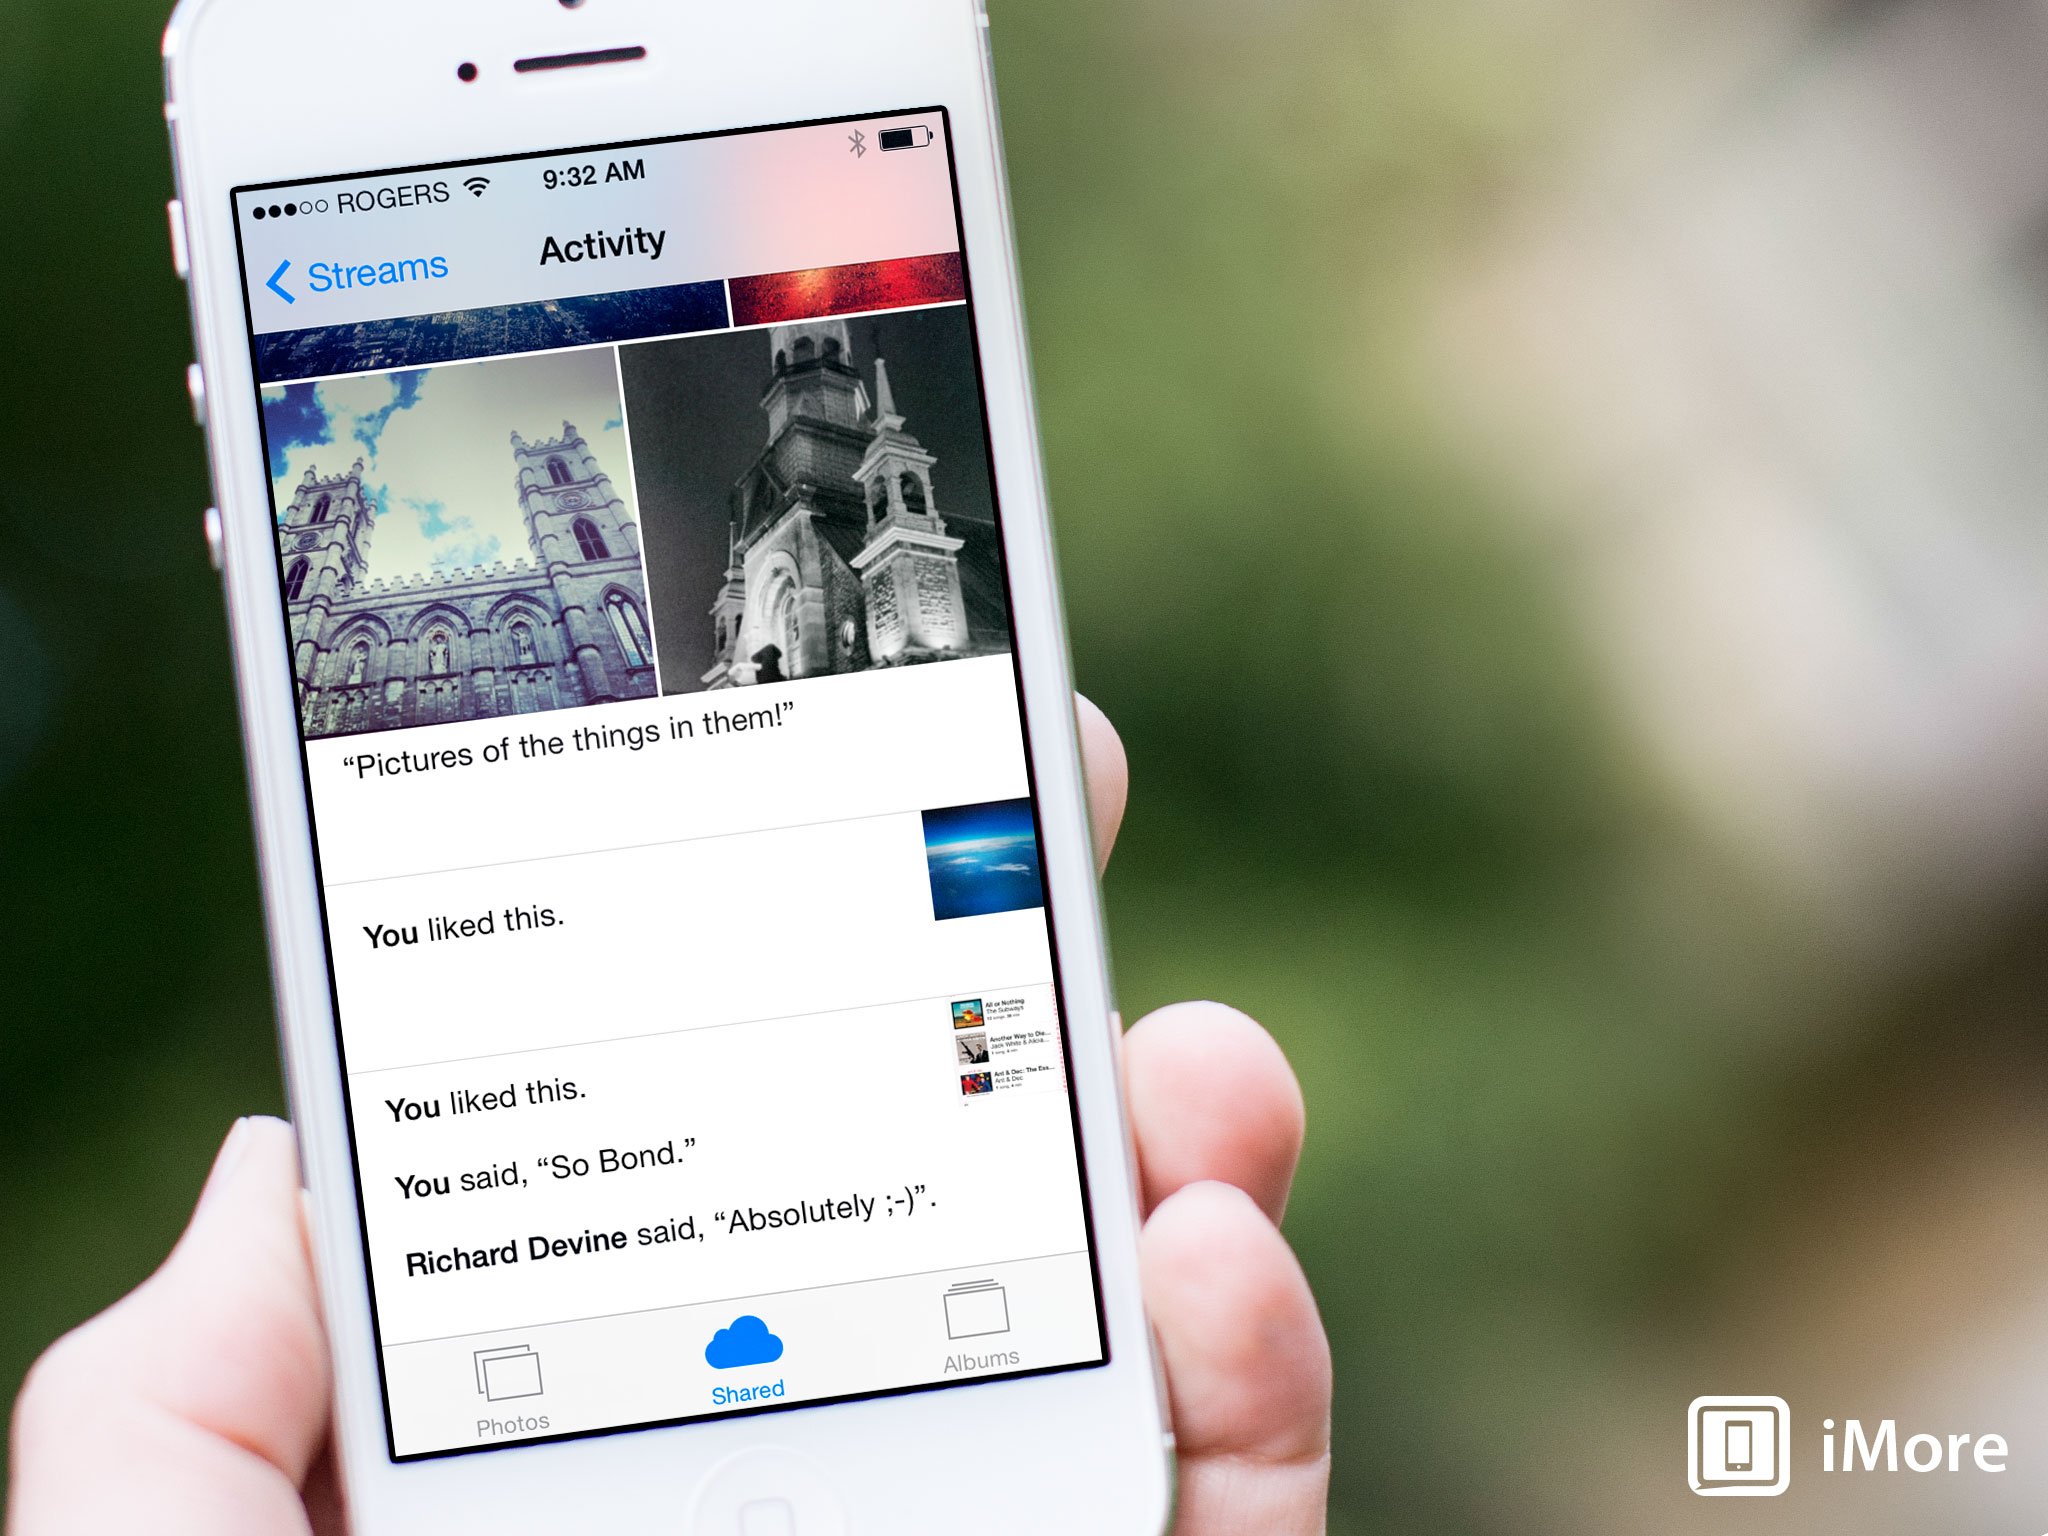 iOS 7 Photo Streams finally get truly social sharing